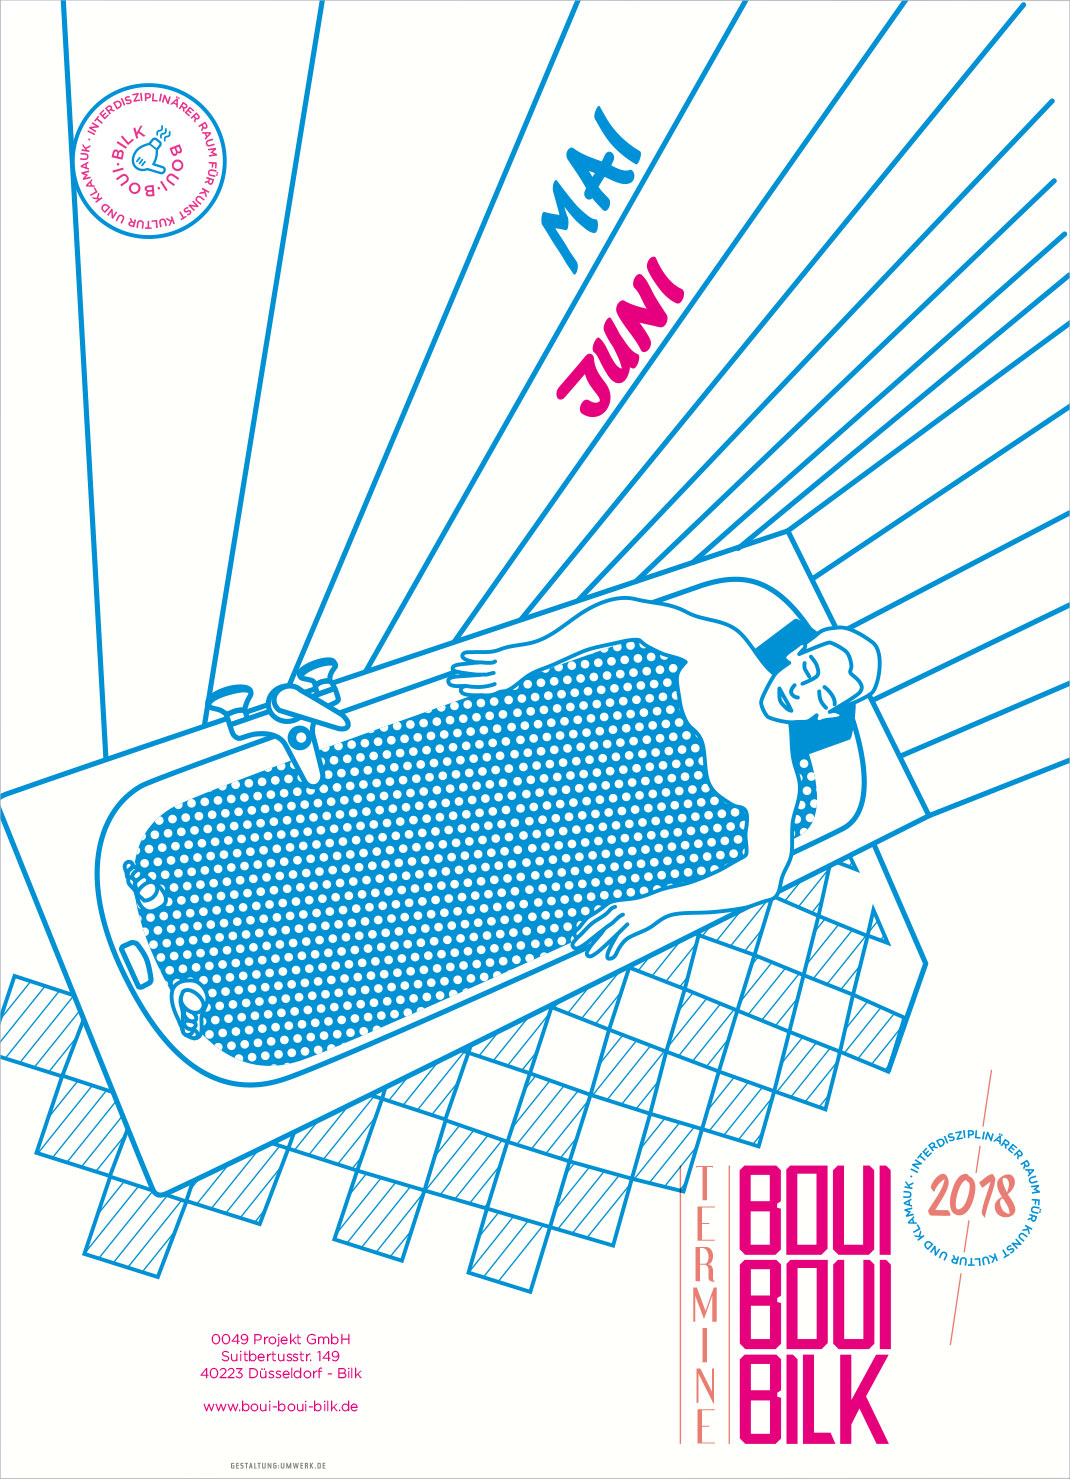 Taking a Bath, linedrawing, Event schedule, flyer design, Illustration, BouiBouiBilk, Düsseldorf, 0049events,